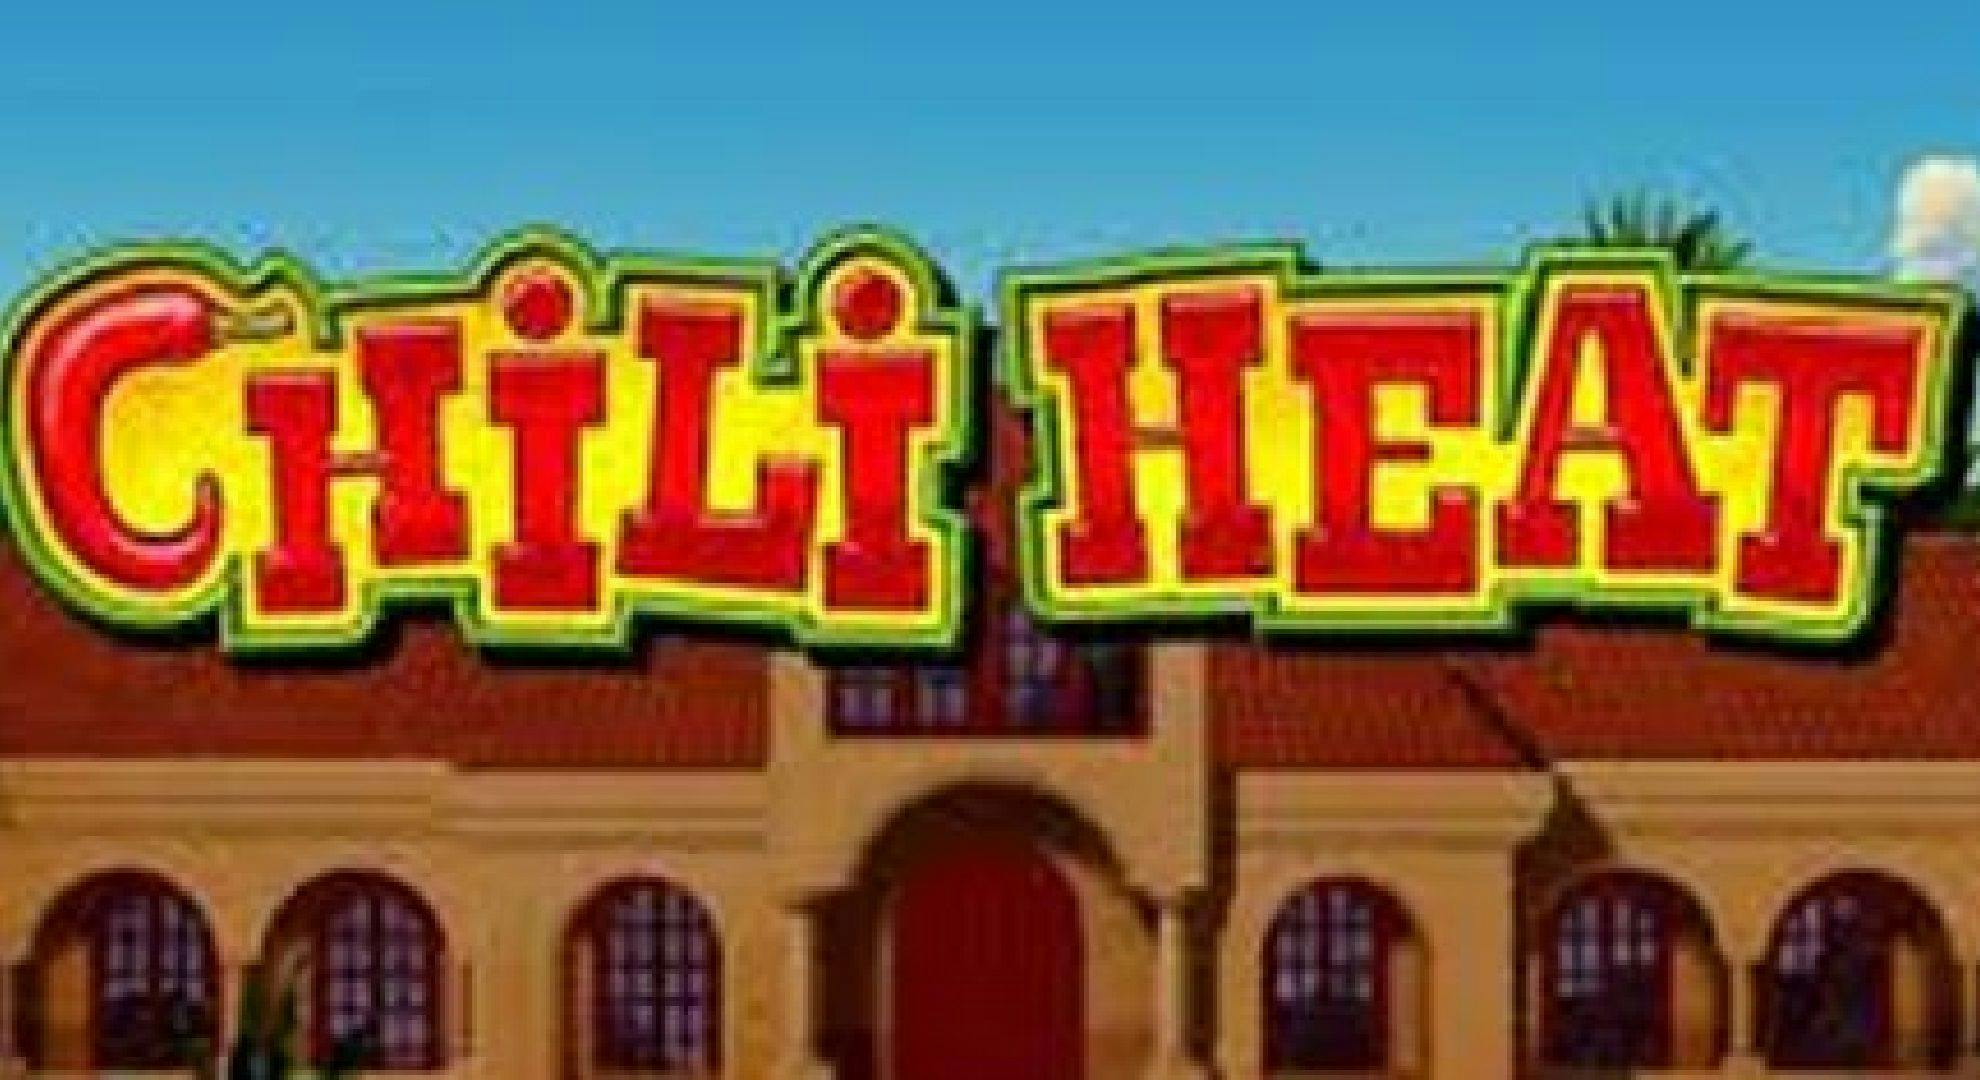 Chili Heat Slot Online Free Play